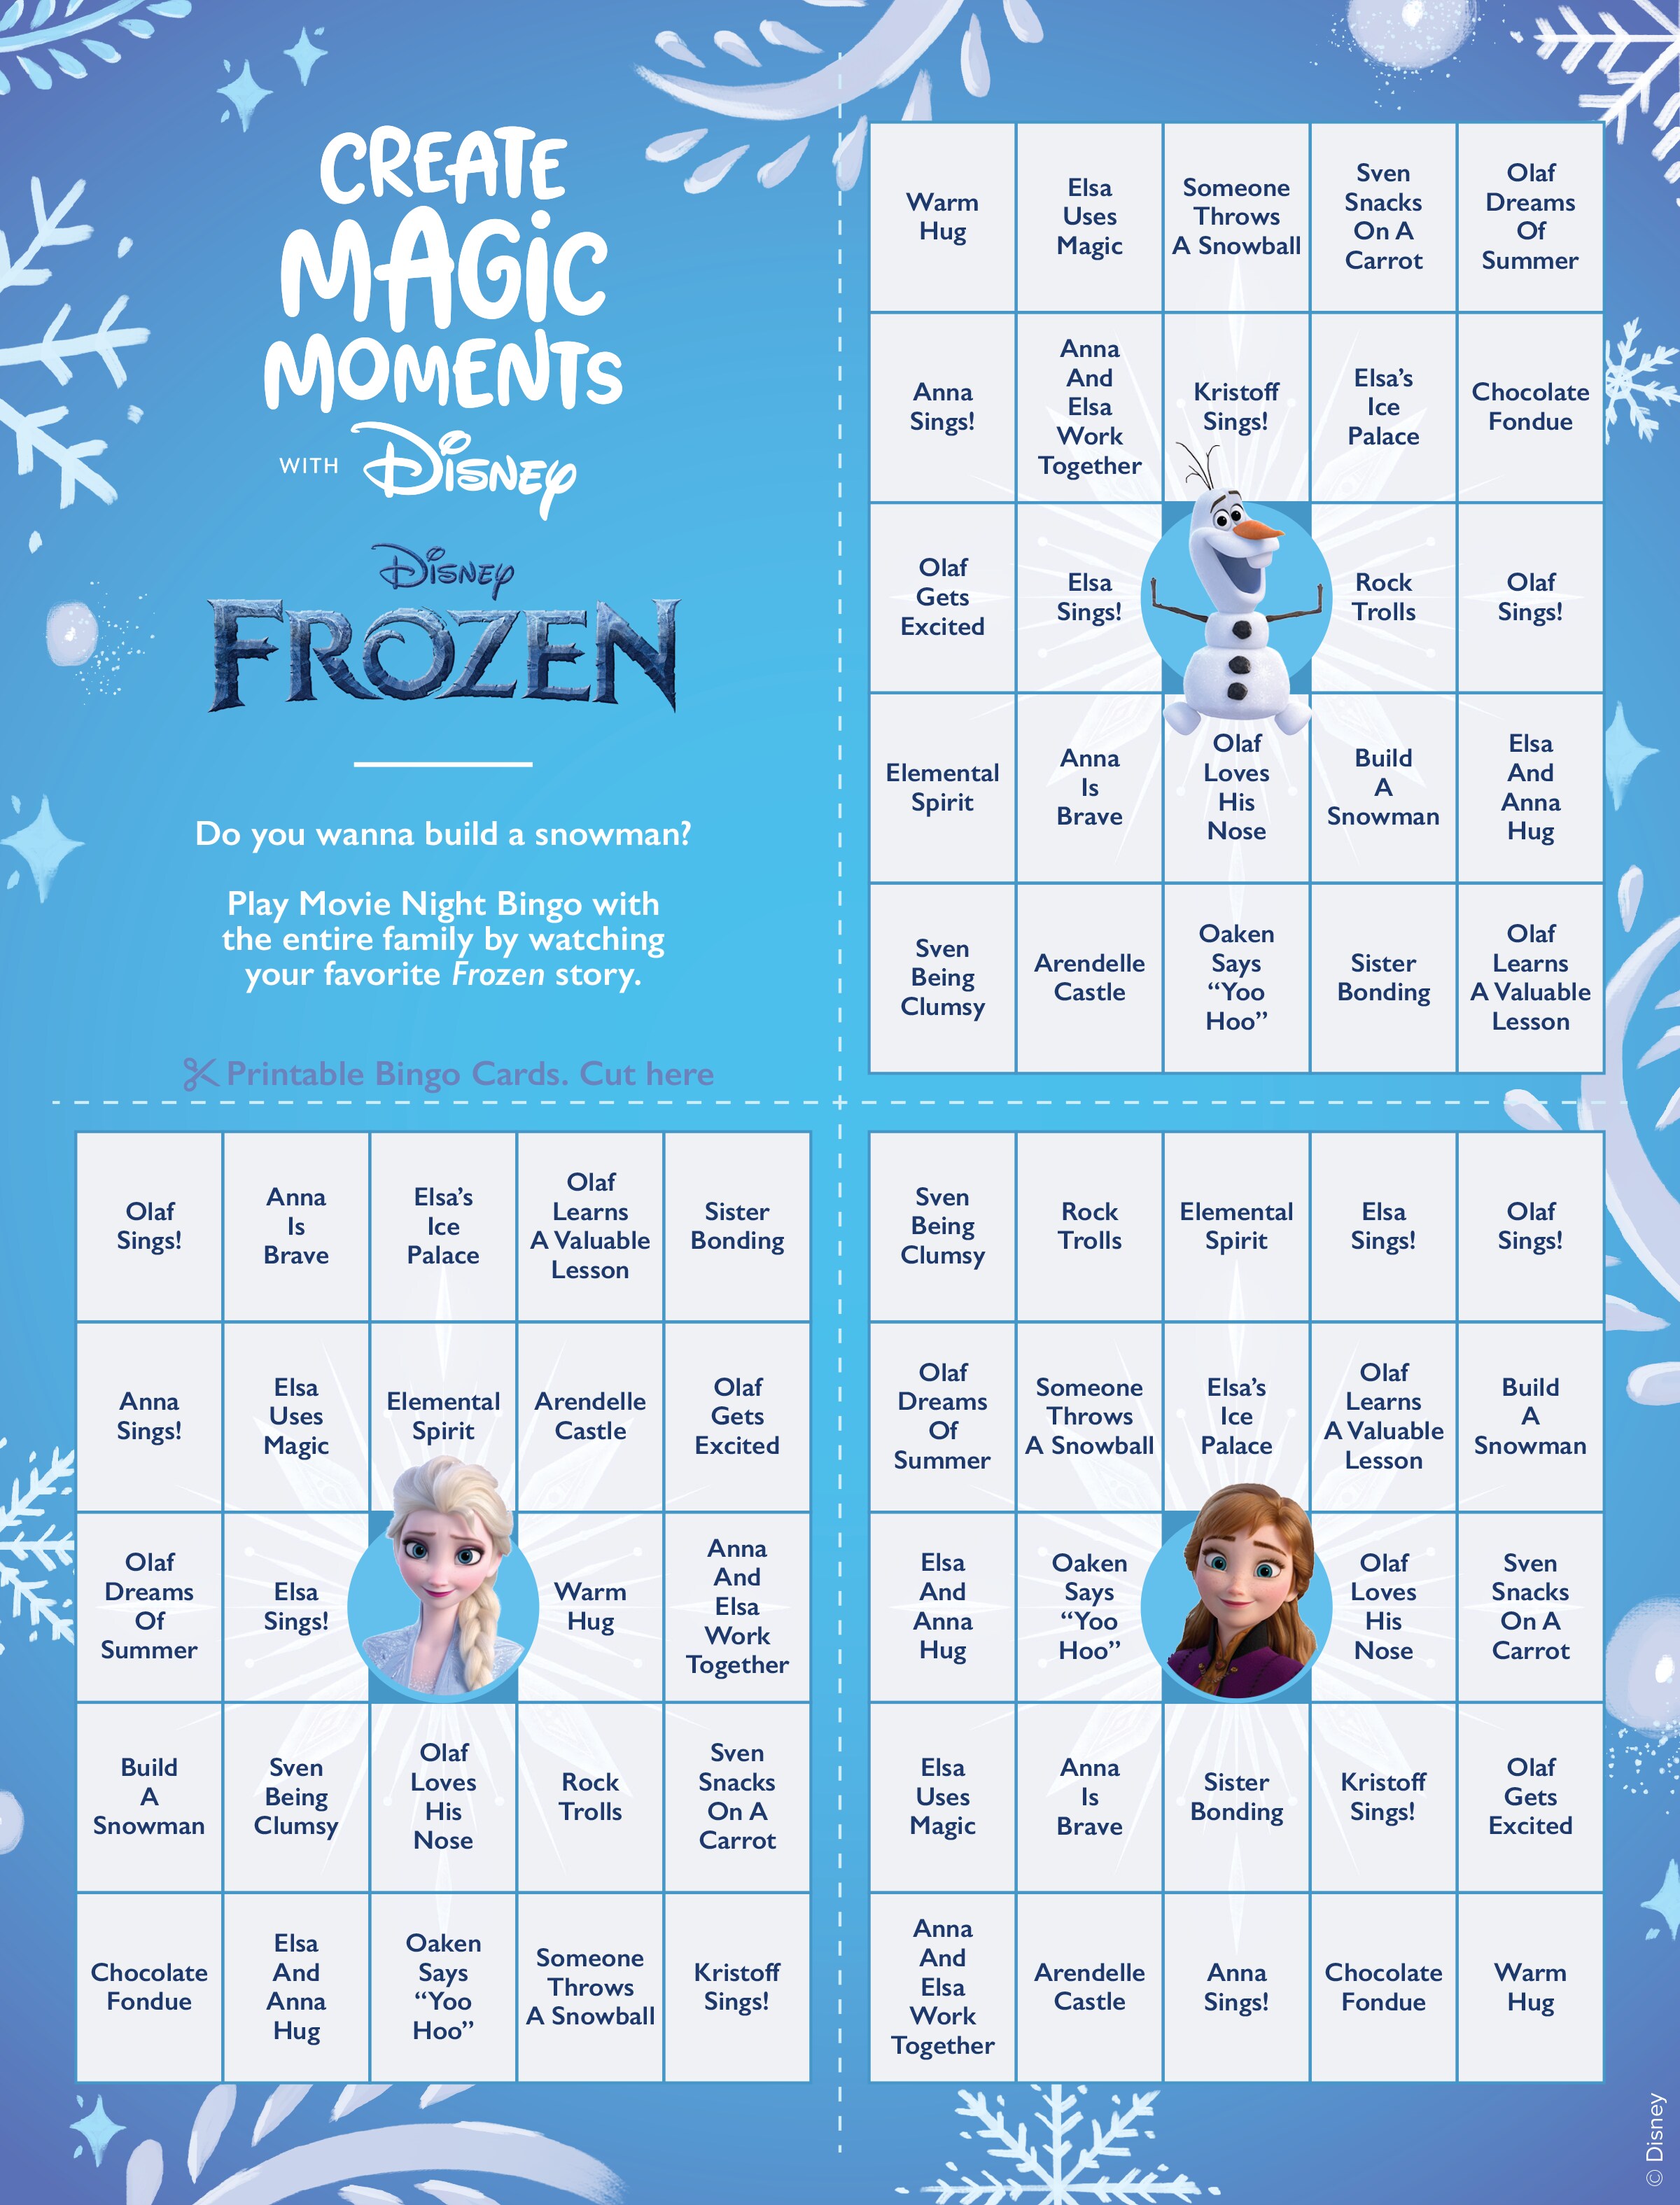 repack-disney-frozen-bingo-free-printable